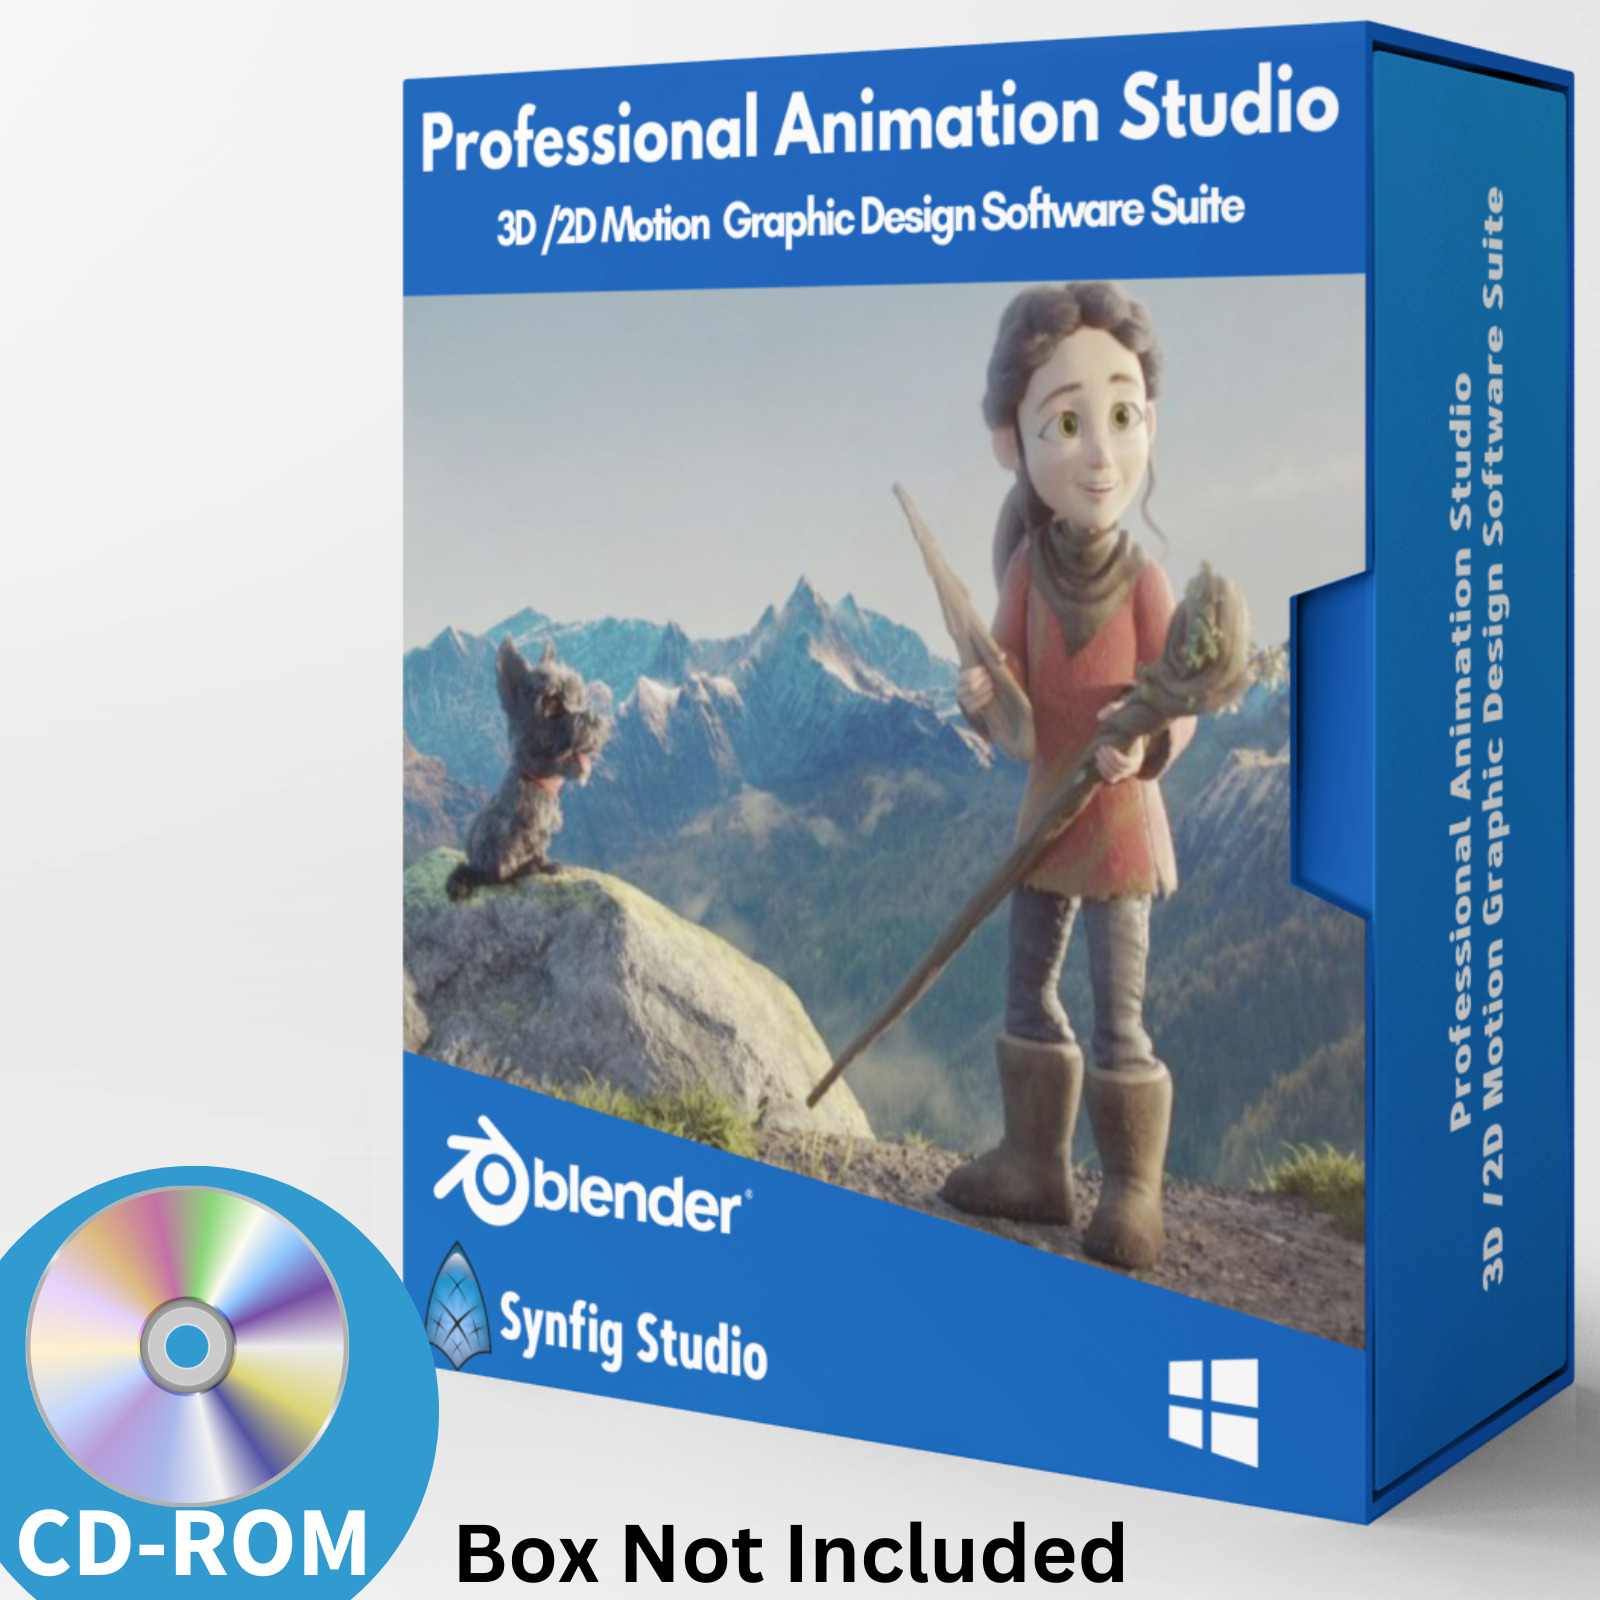 Animation Studio PRO 3D/2D Motion Graphic Design Software Suite - Windows on CD